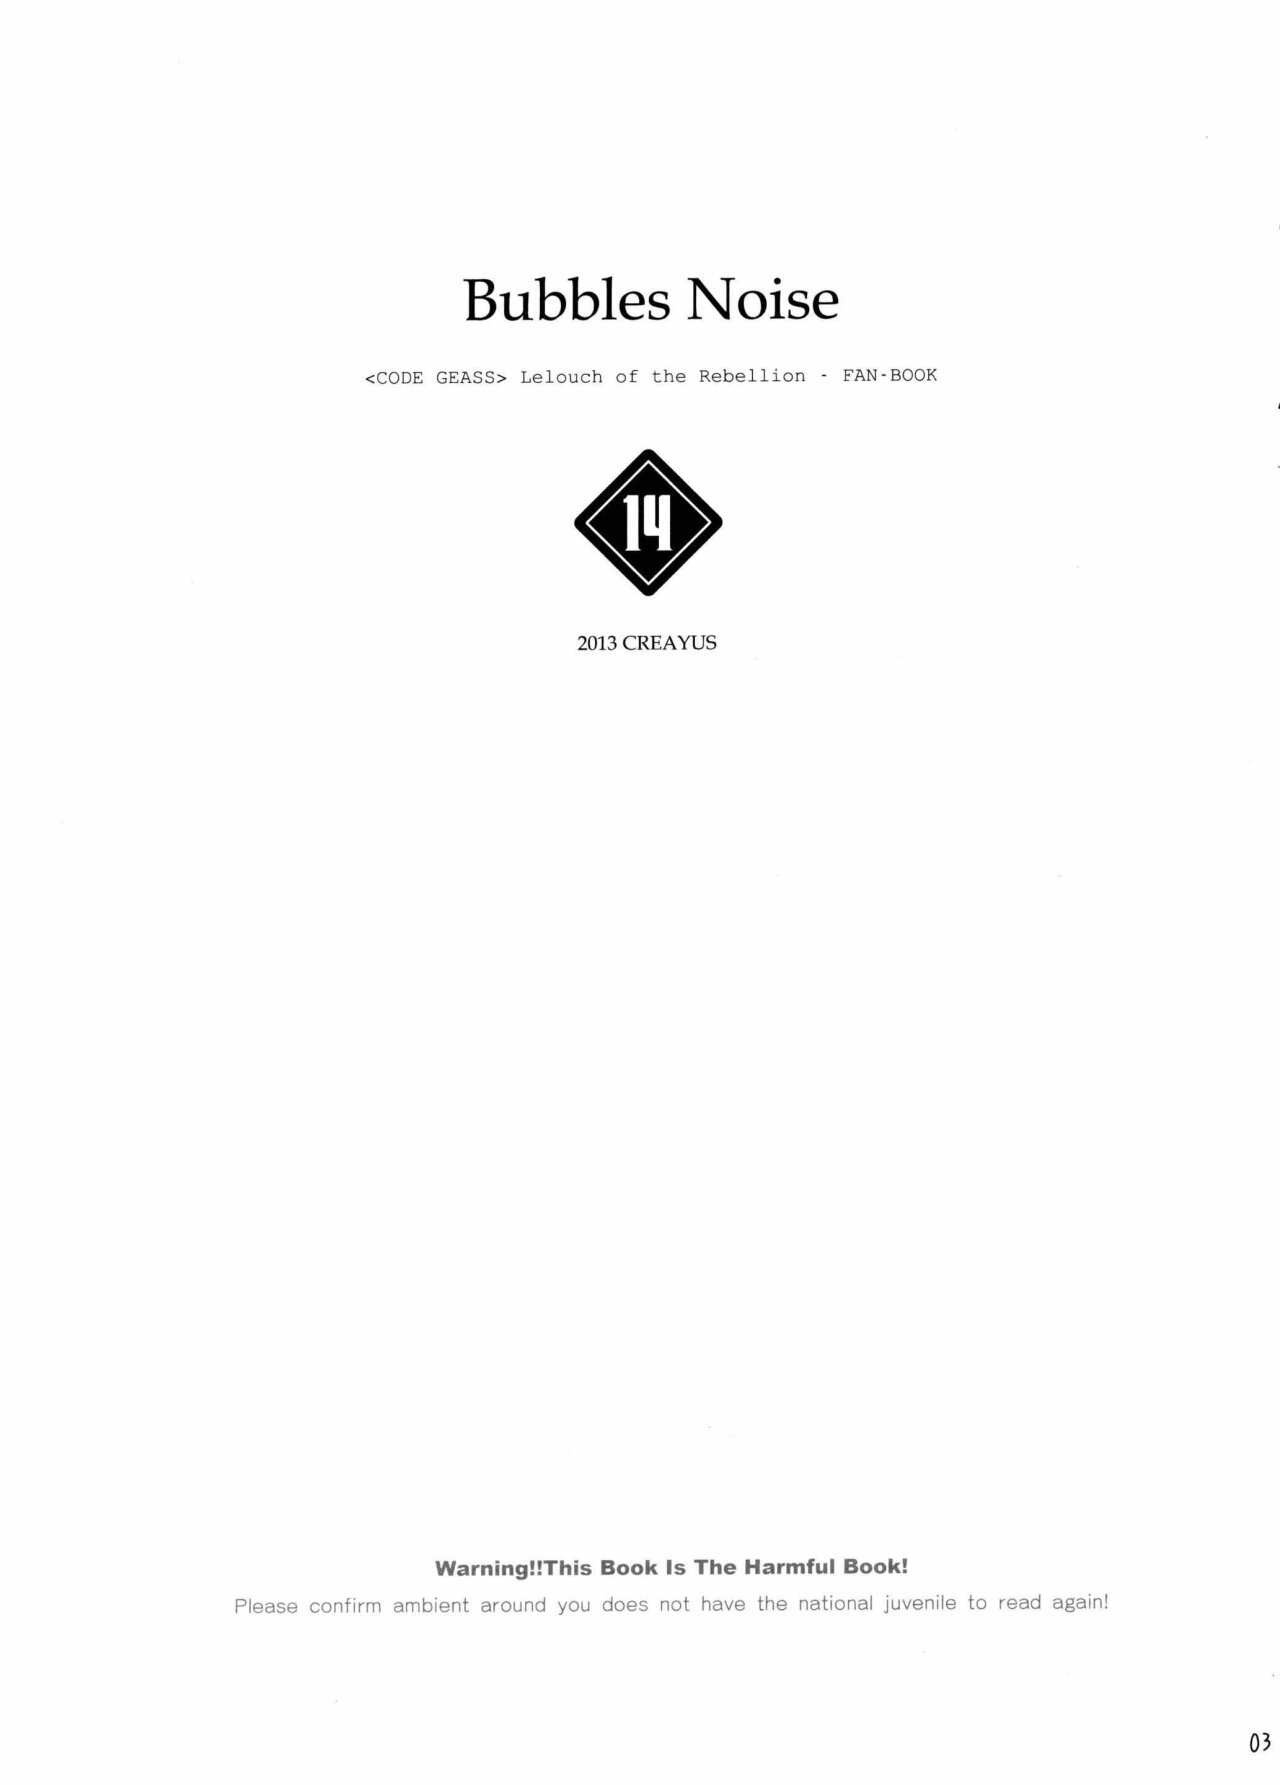 Code Geass Lelouch Of The Rebellion - Bubbles Noise - 3